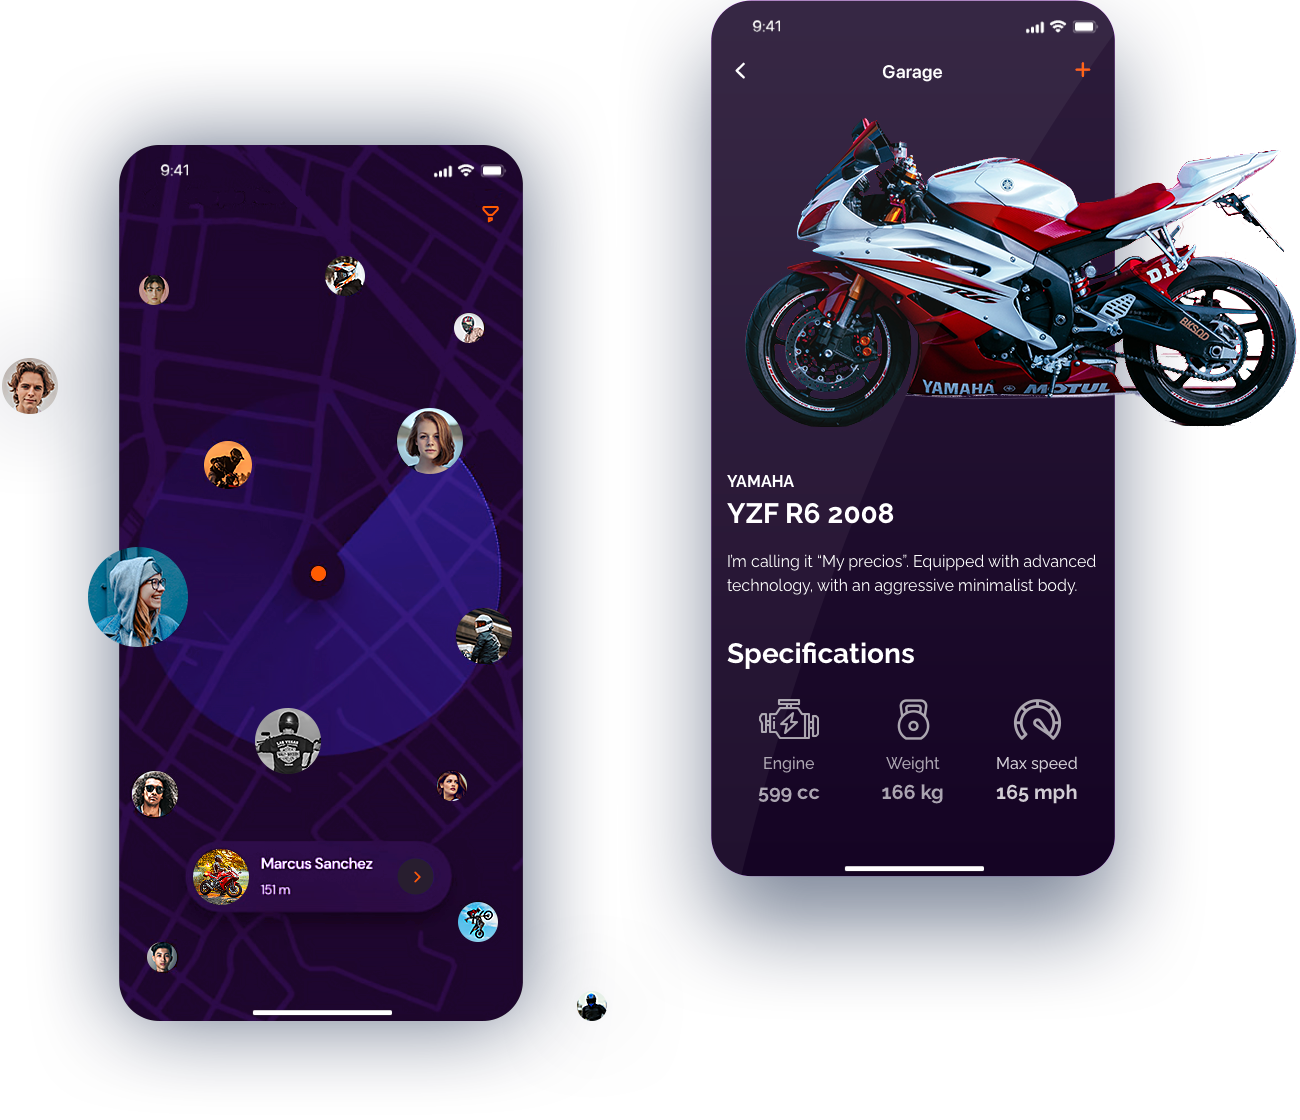 CRYPTOMOTO Super-App for motorcyclists